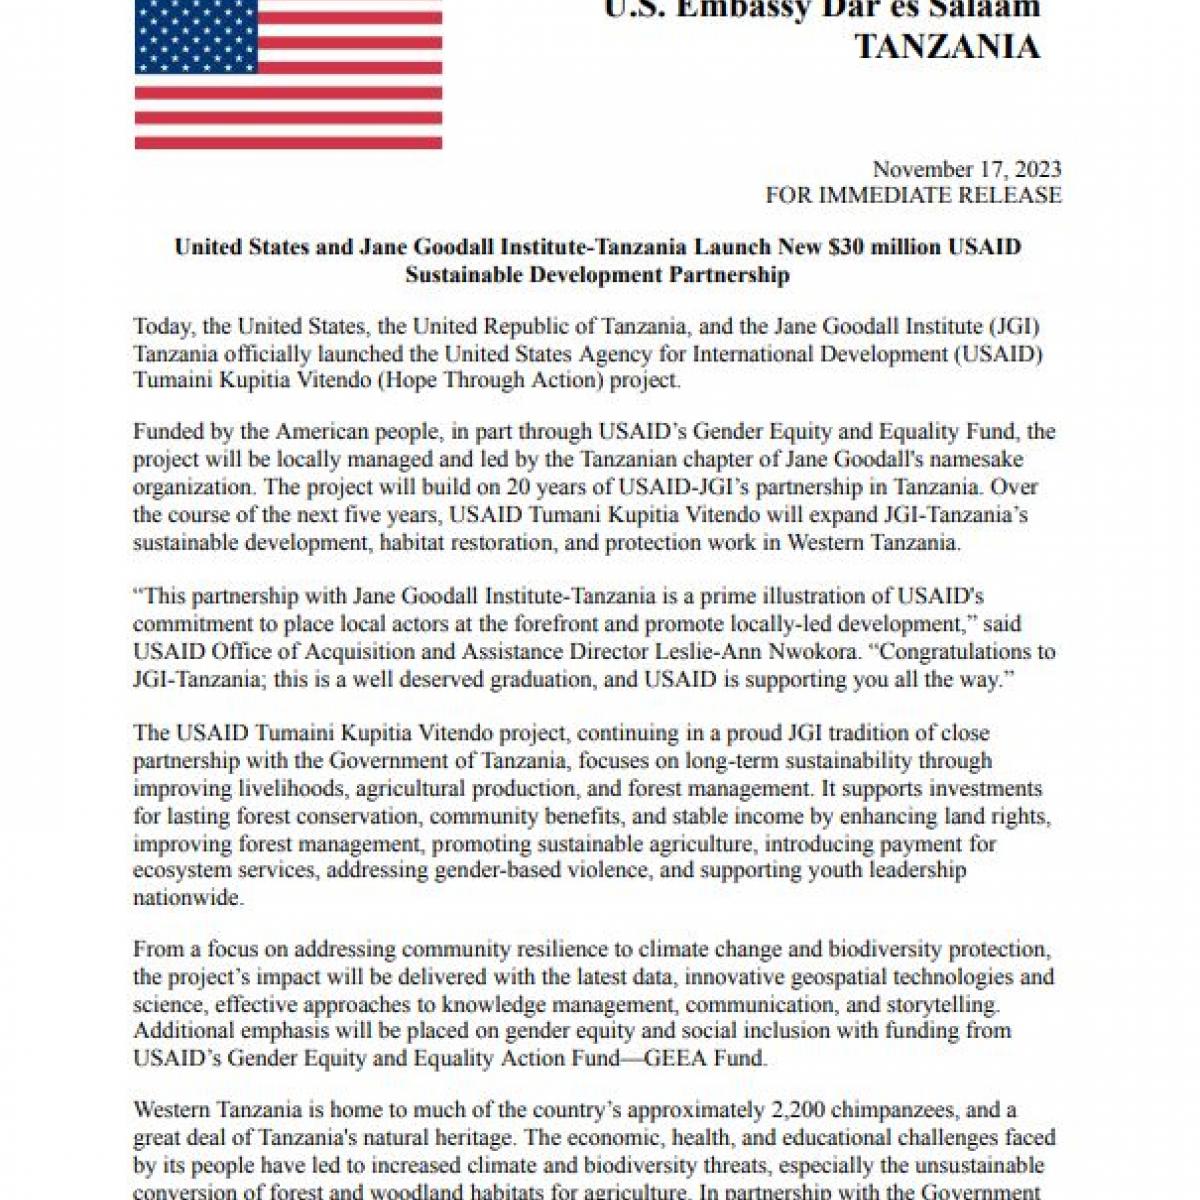 United States and Jane Goodall Institute-Tanzania Launch New $30 million USAID Sustainable Development Partnership